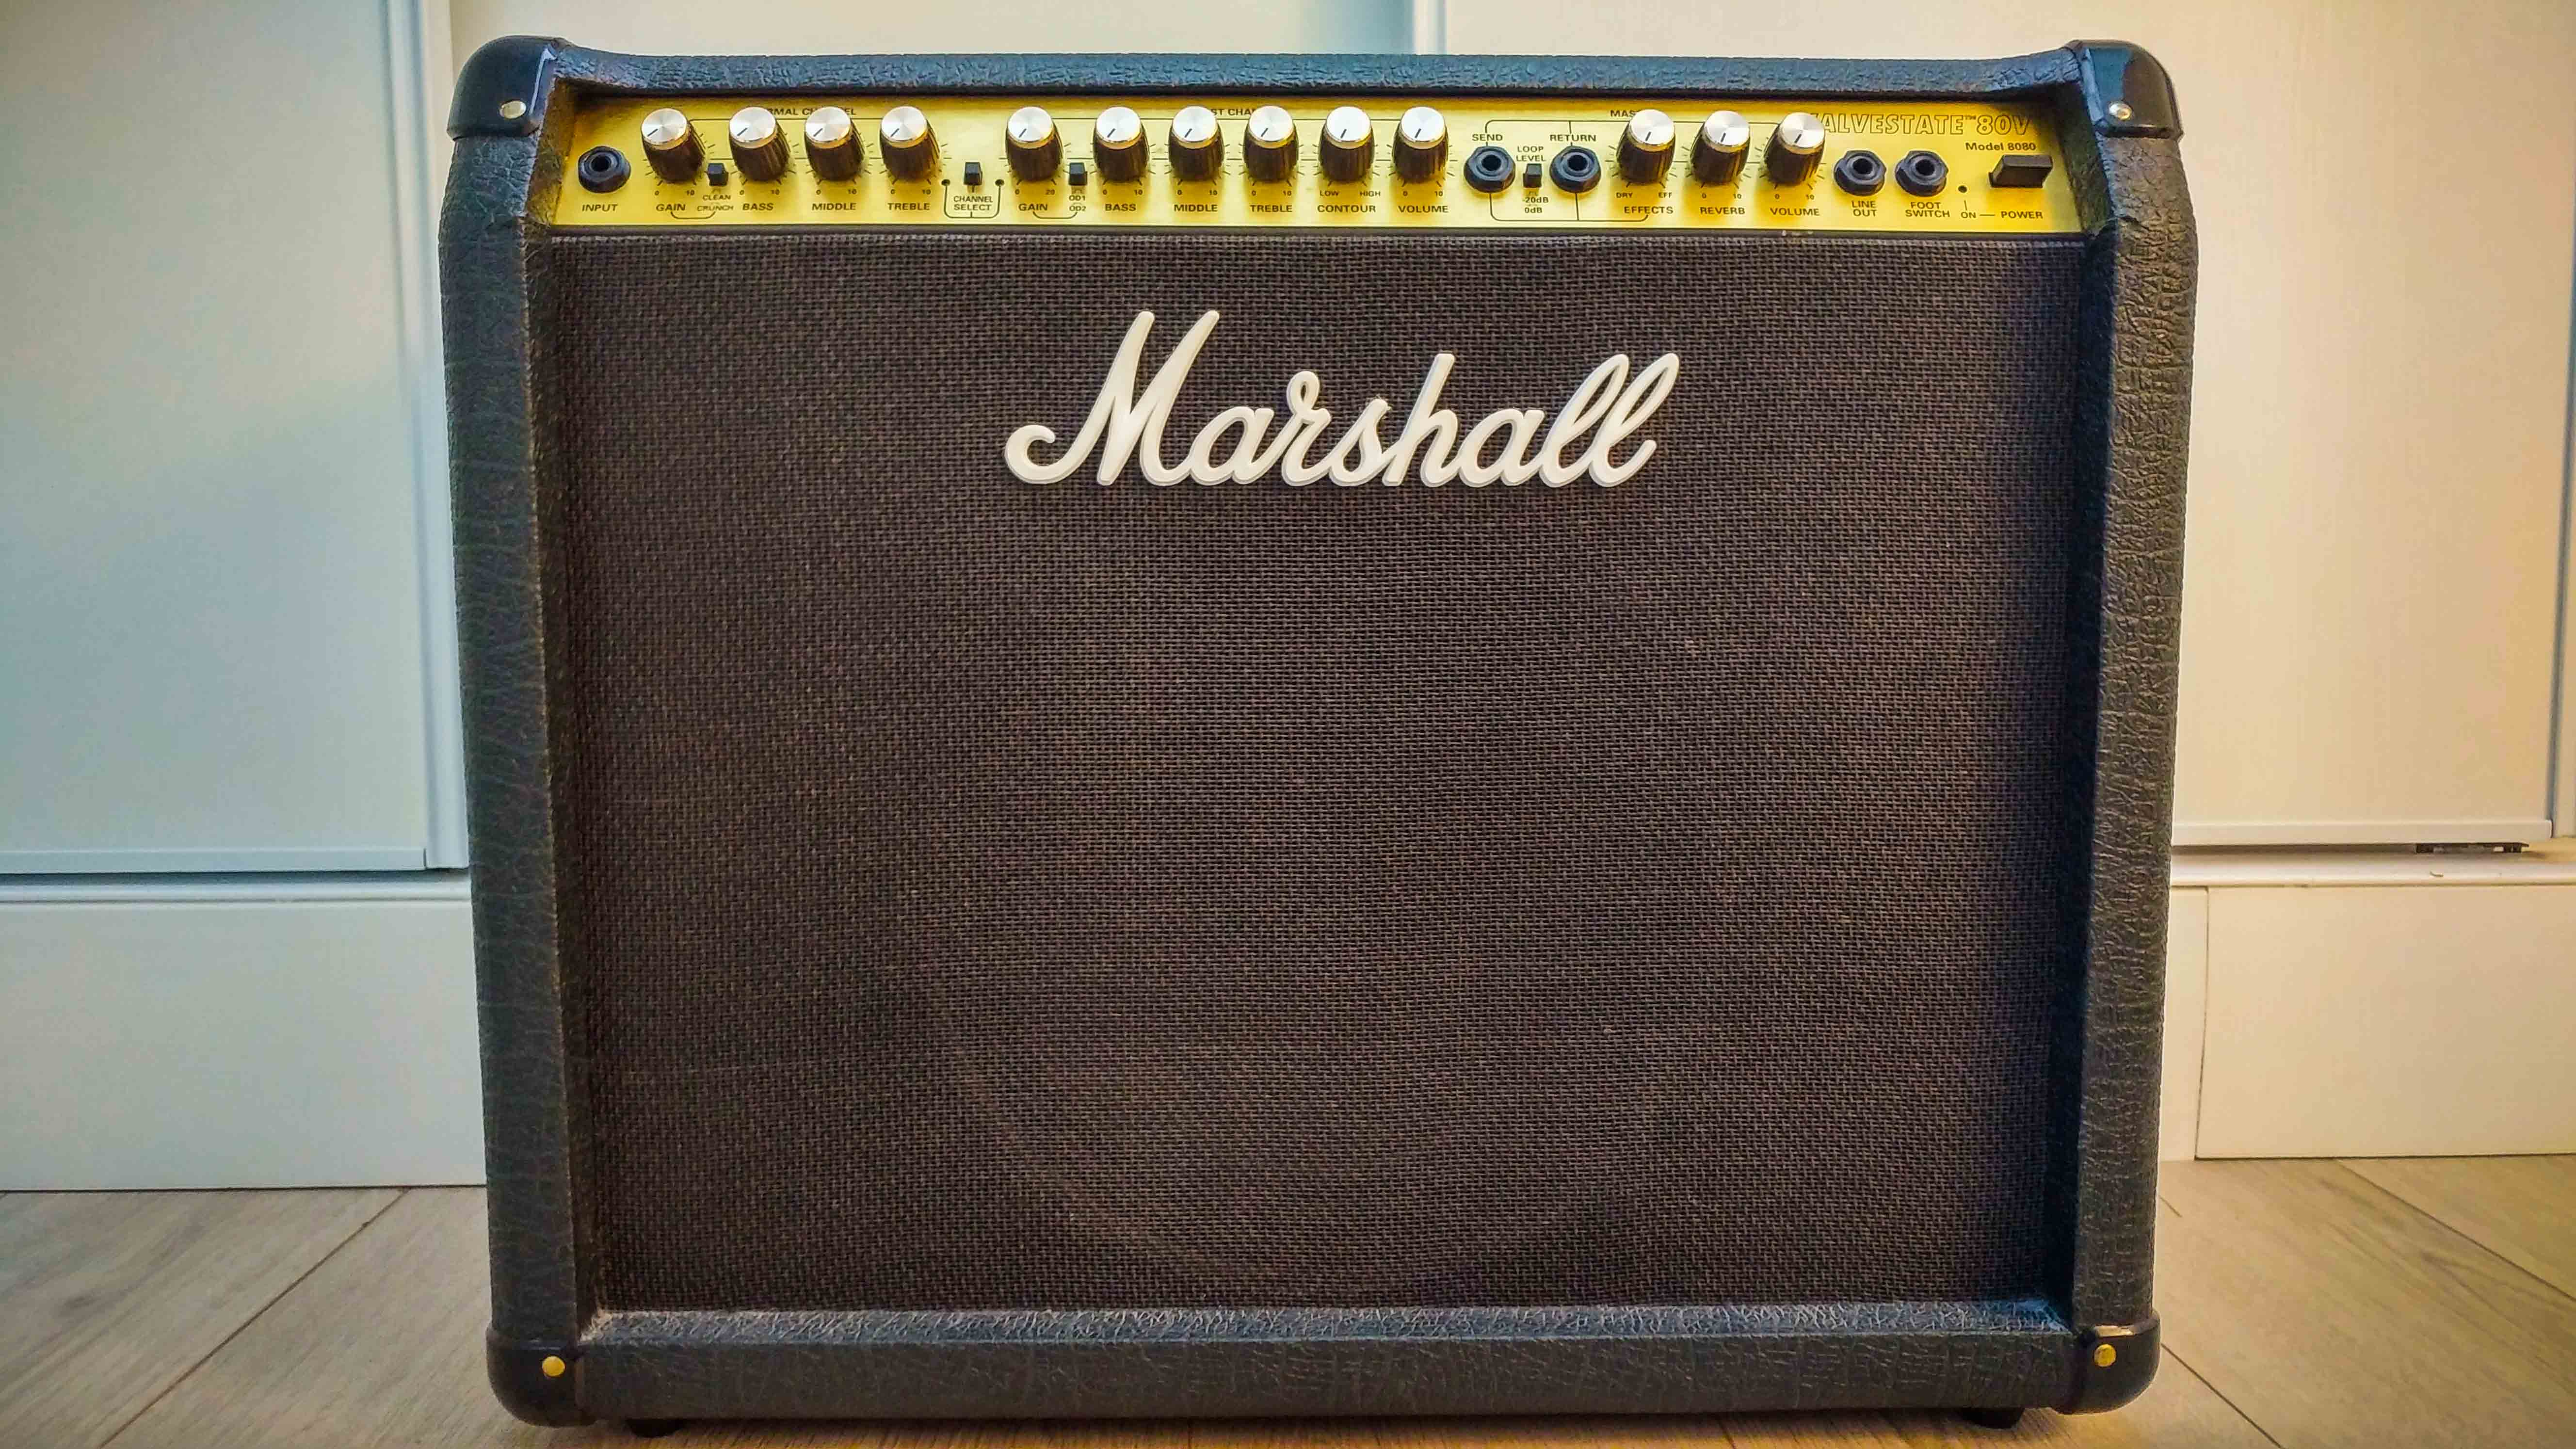 Marshall マーシャル MODEL 8080 VALVESTATE 80V